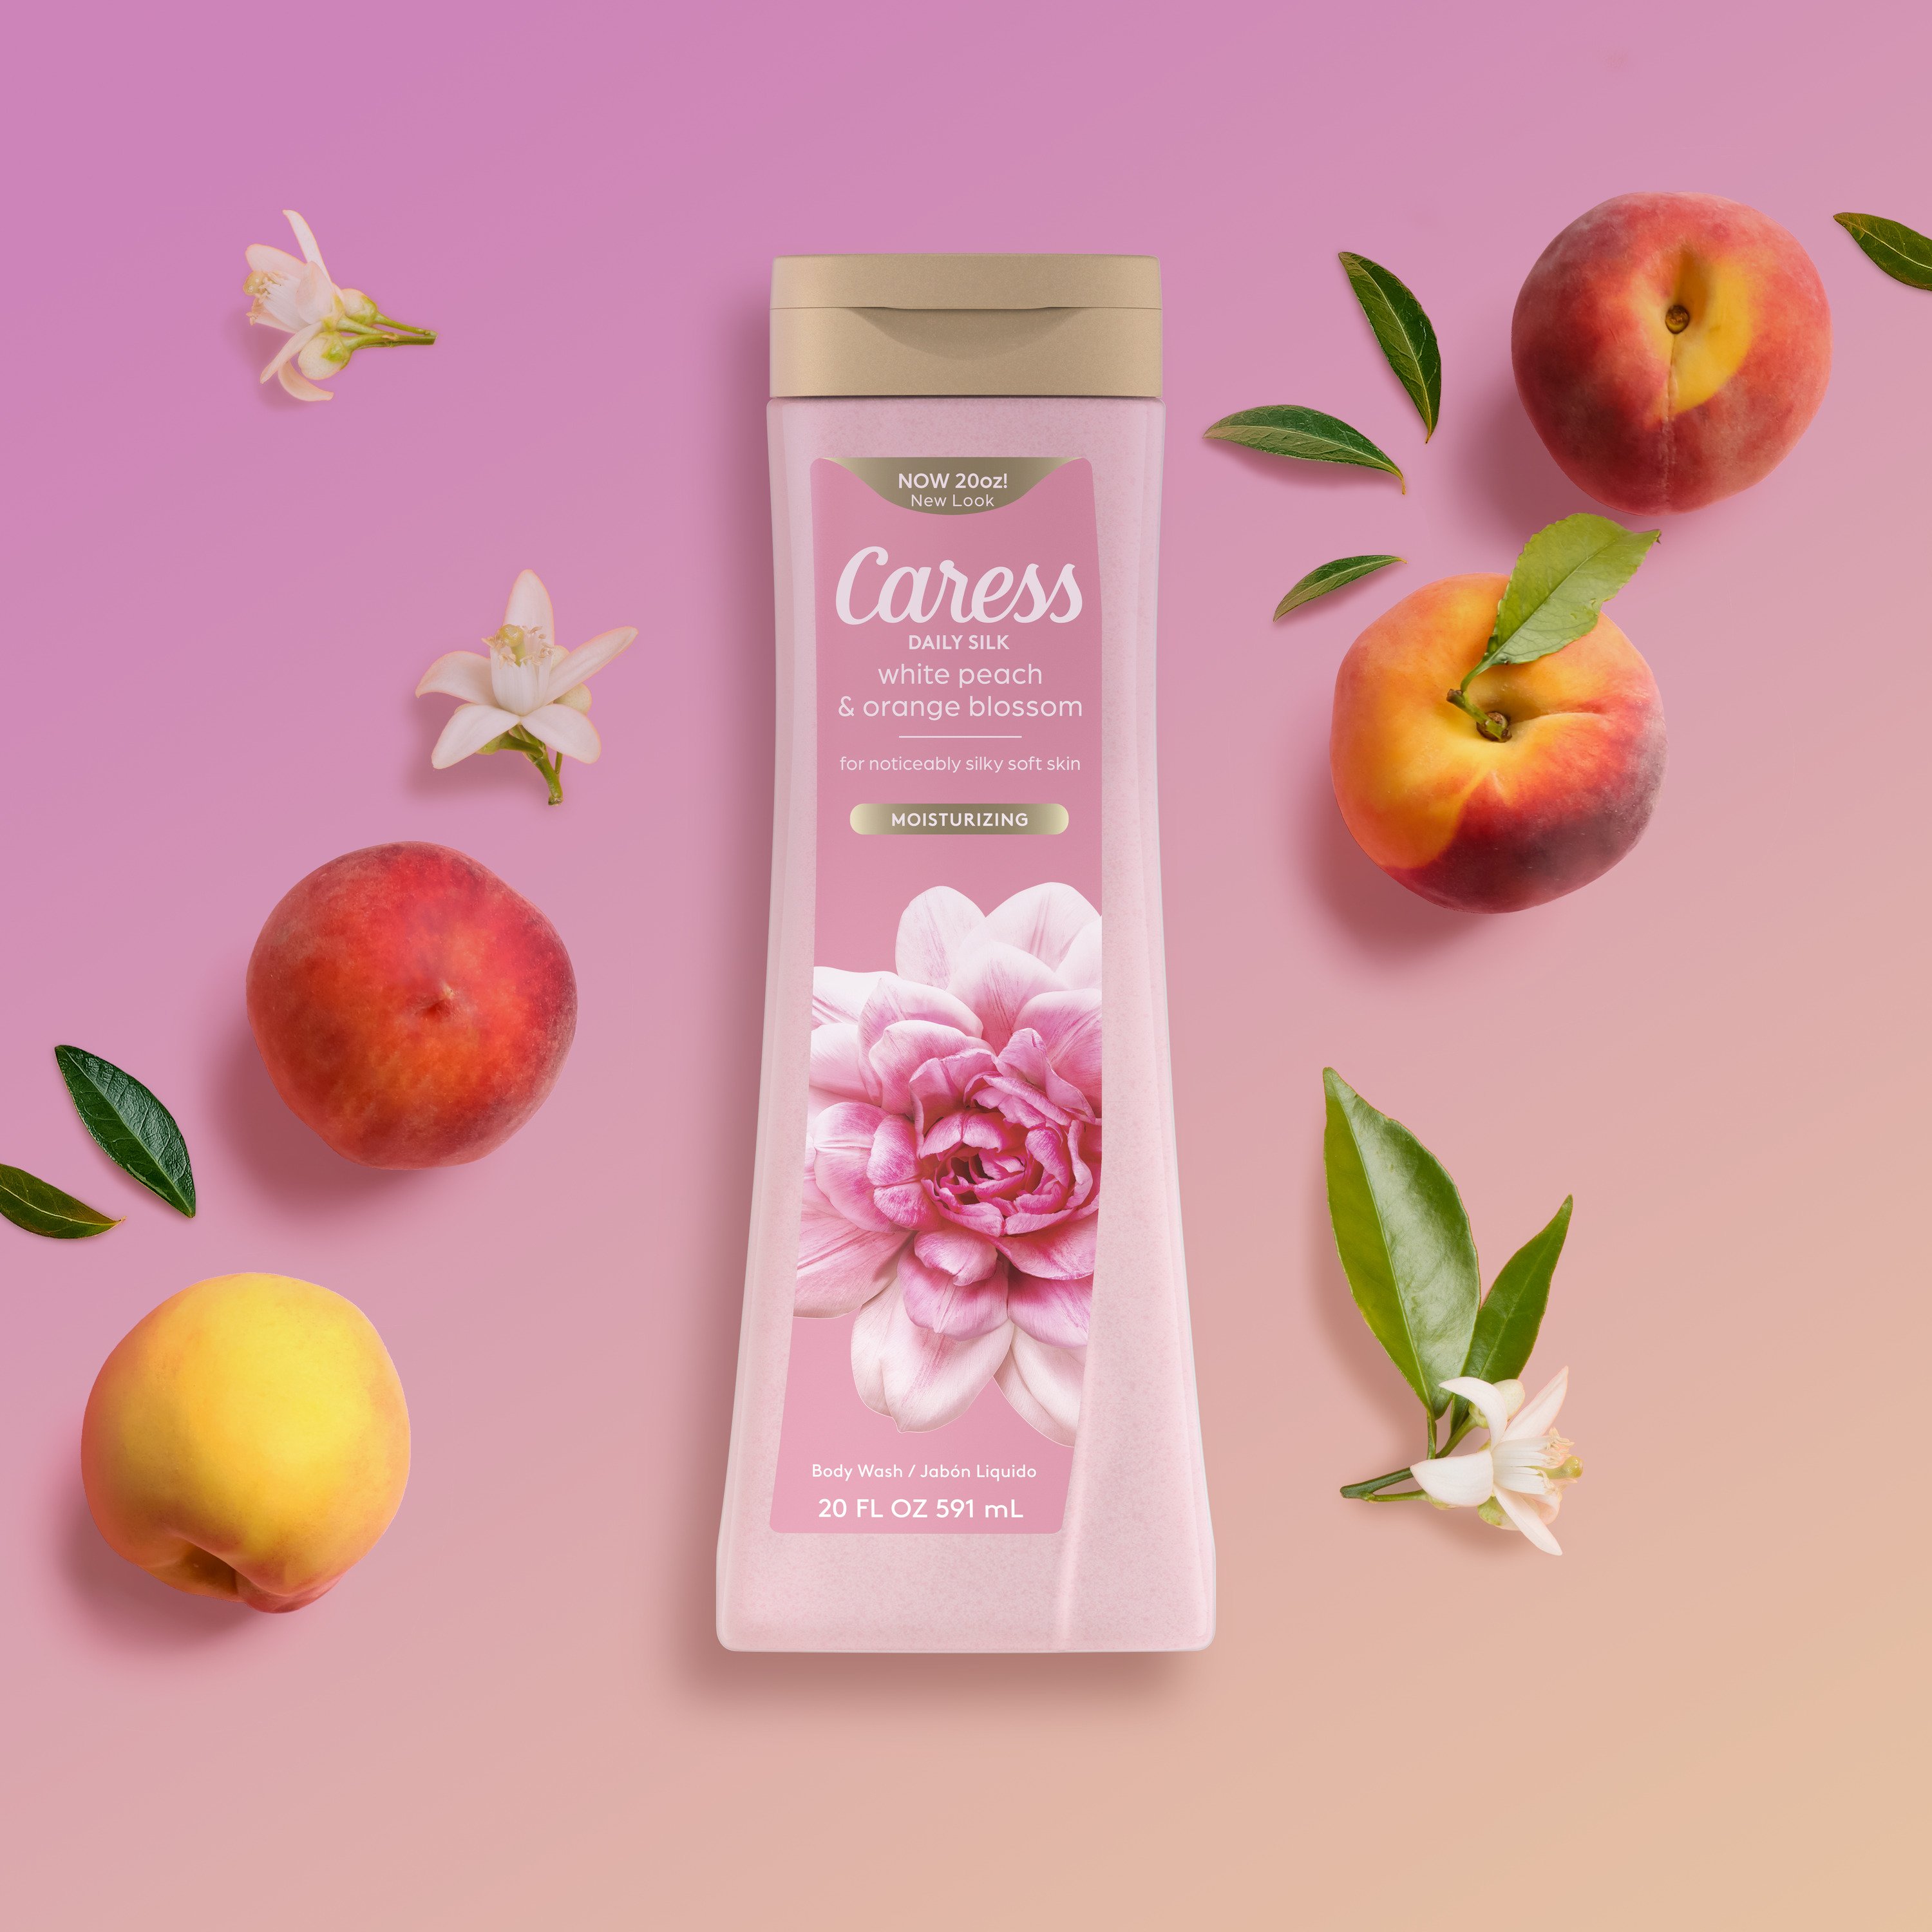 Caress Daily Silk Body Wash - White Peach & Orange Blossom